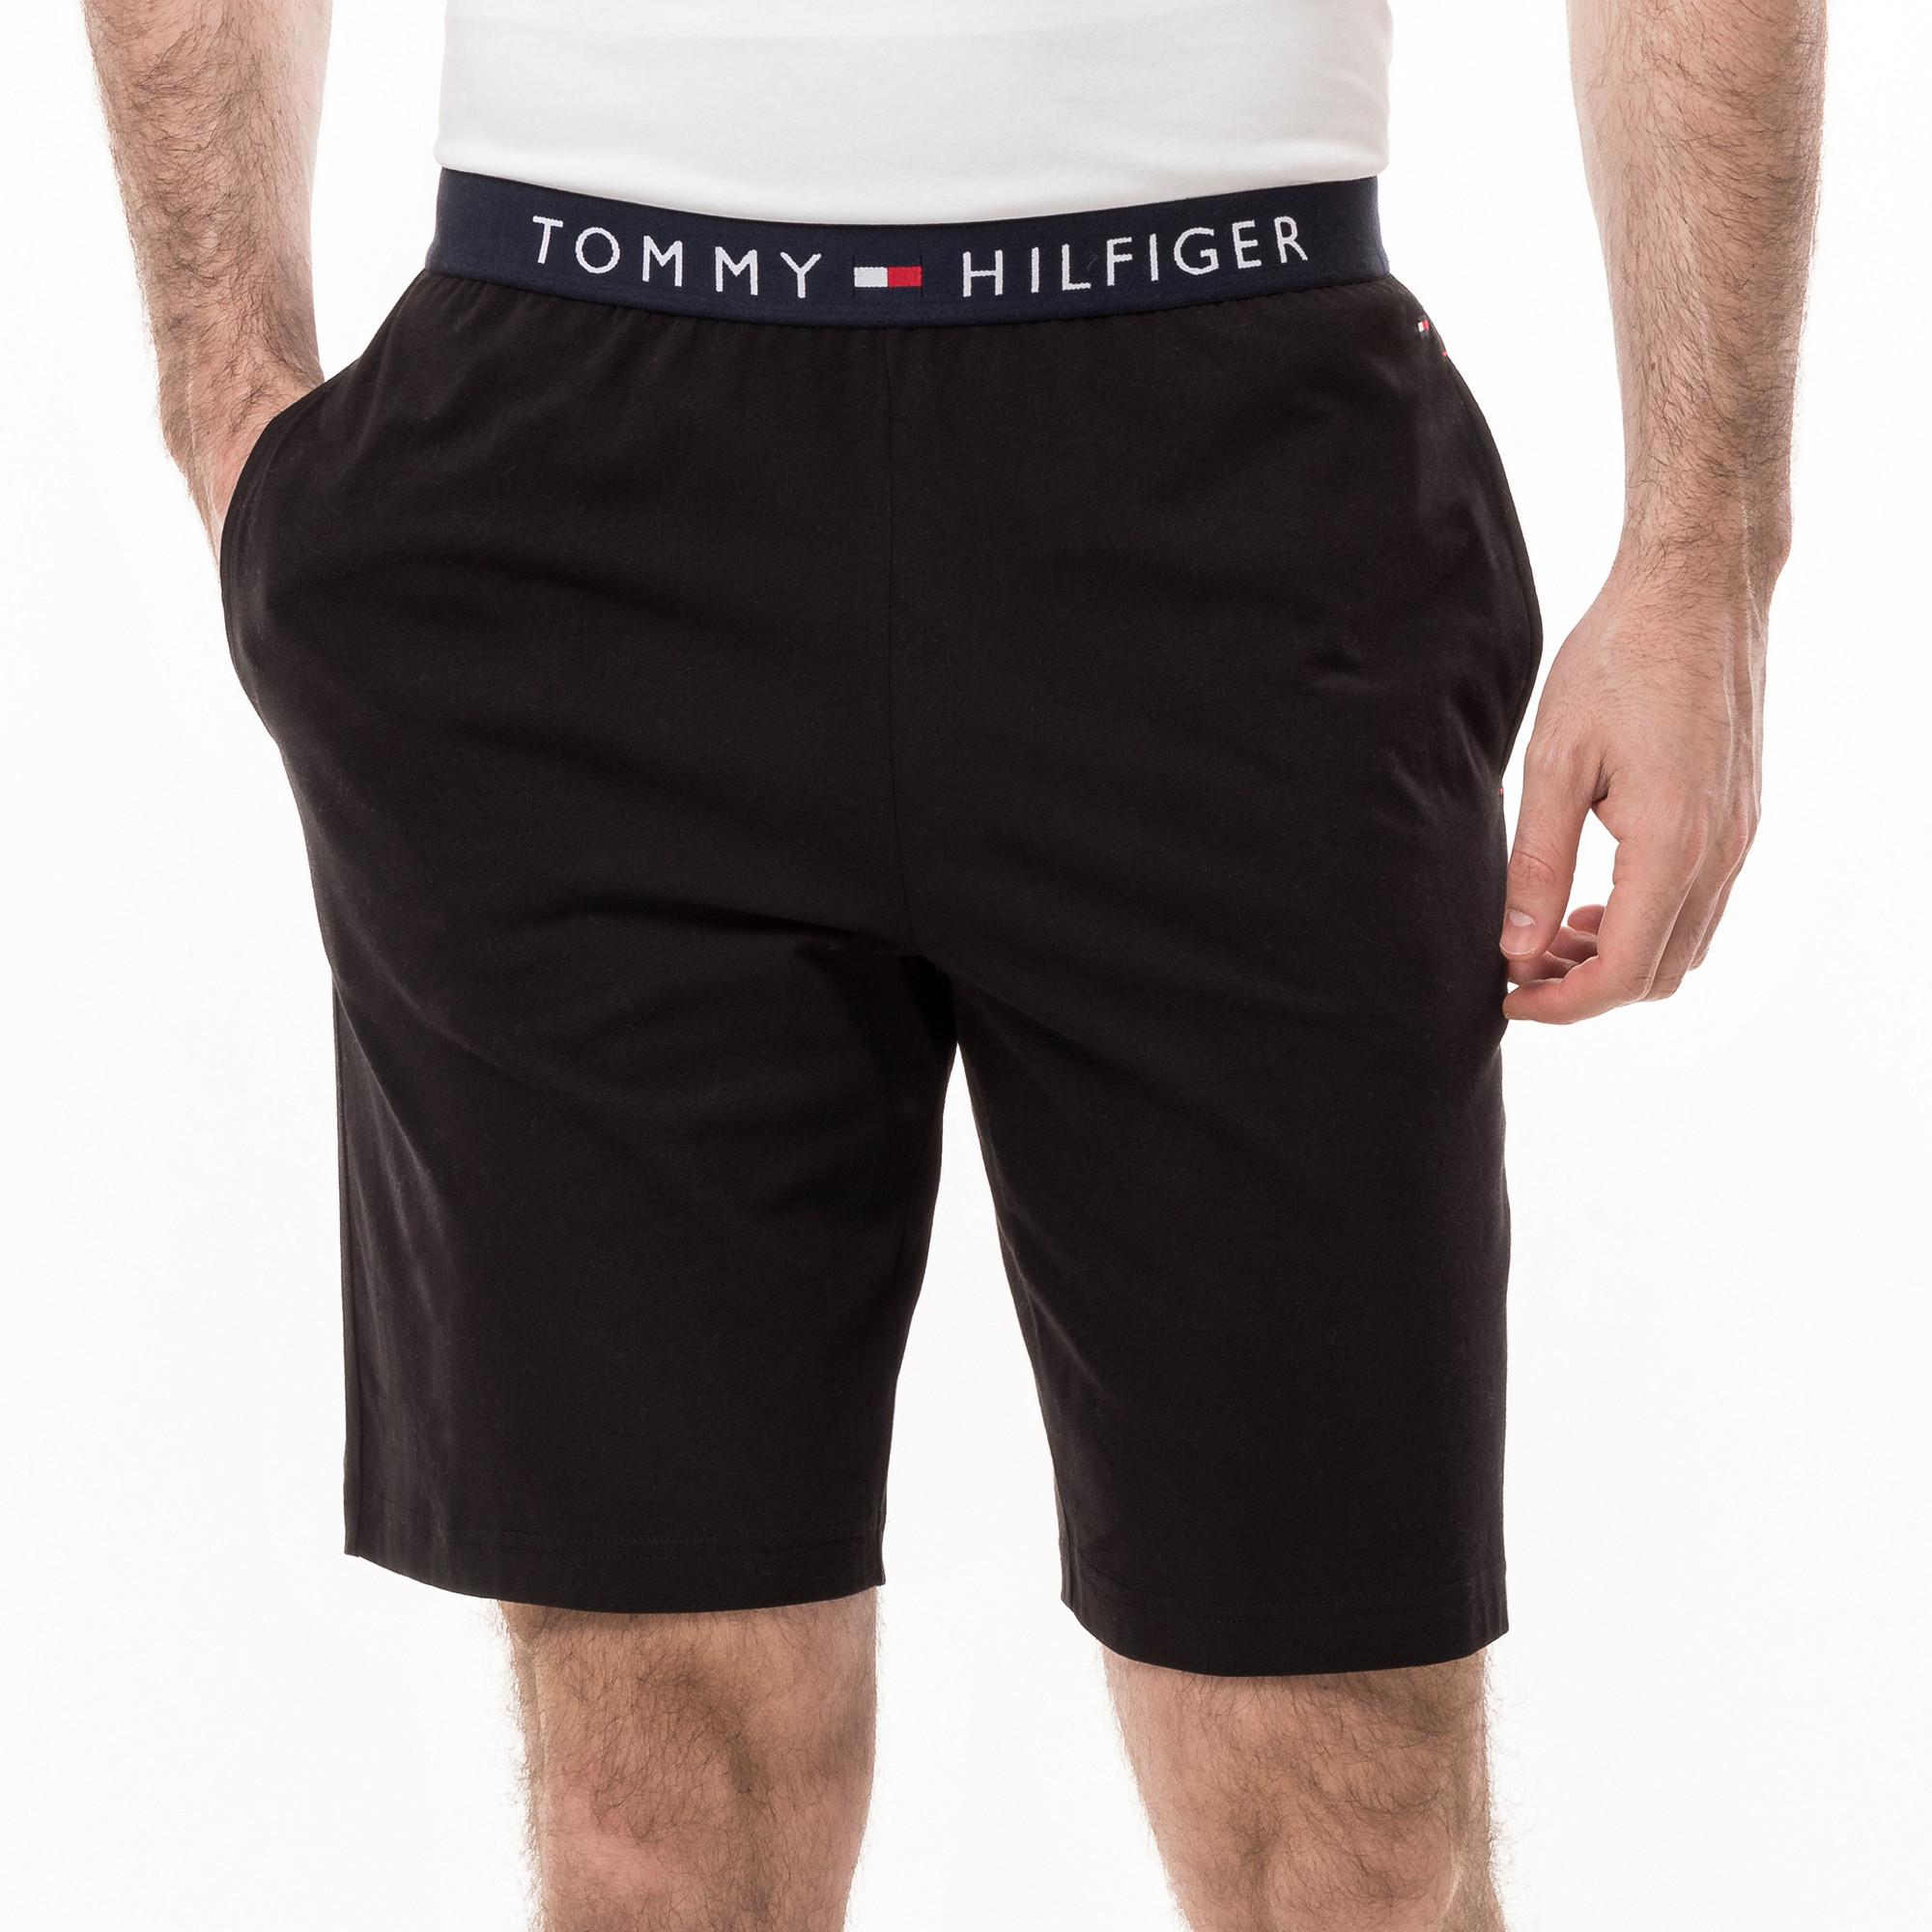 TOMMY HILFIGER  Shorts 